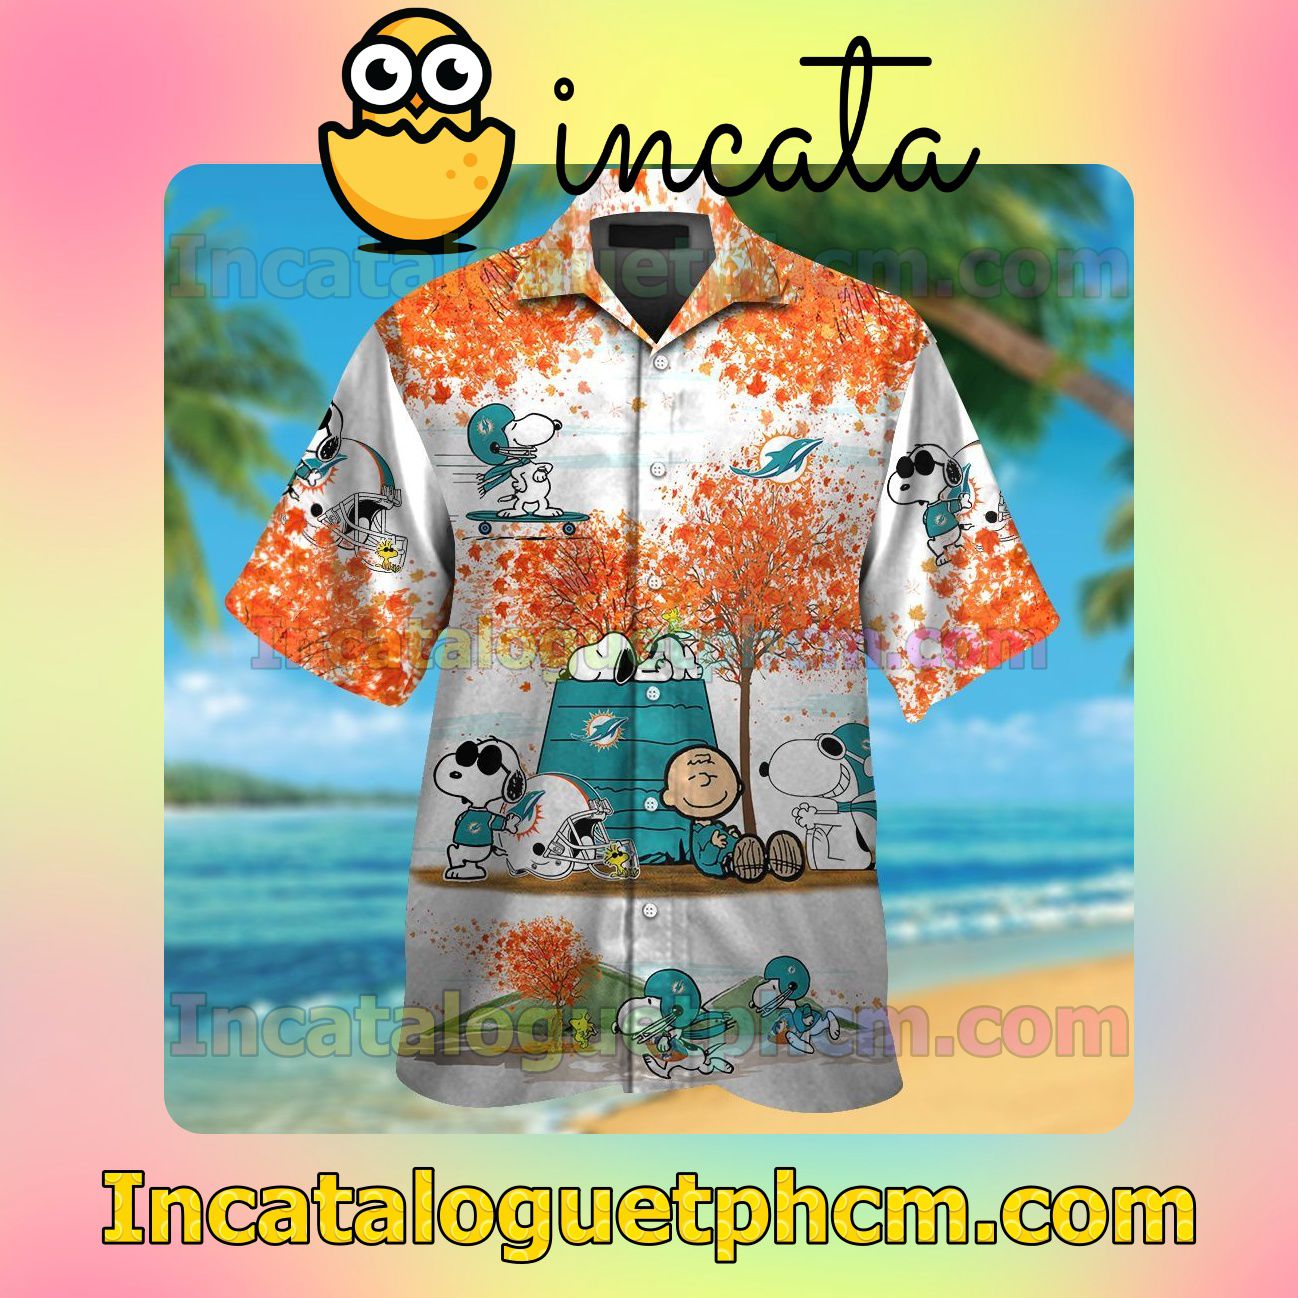 Miami Dolphins Snoopy Autumn Beach Vacation Shirt, Swim Shorts